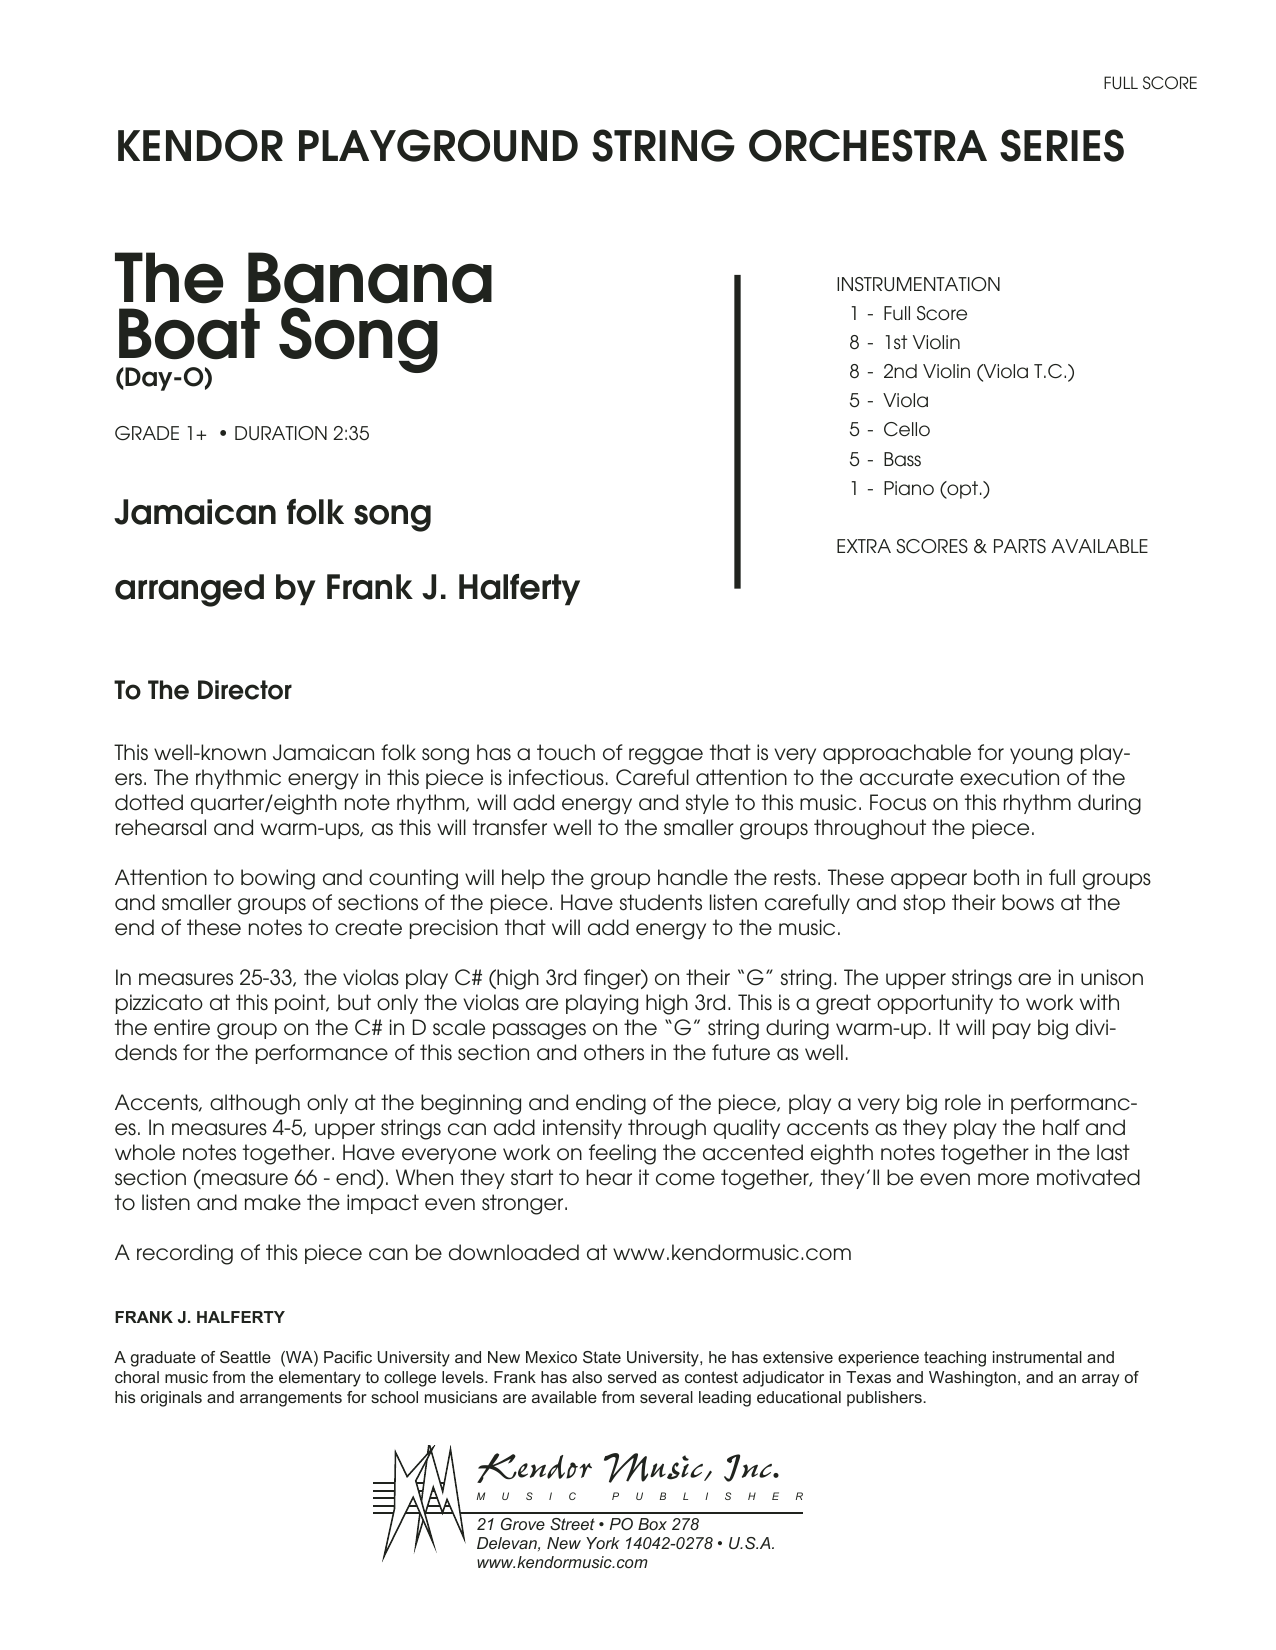 Frank J. Halferty Banana Boat Song, The (Day-O) - Full Score sheet music notes printable PDF score